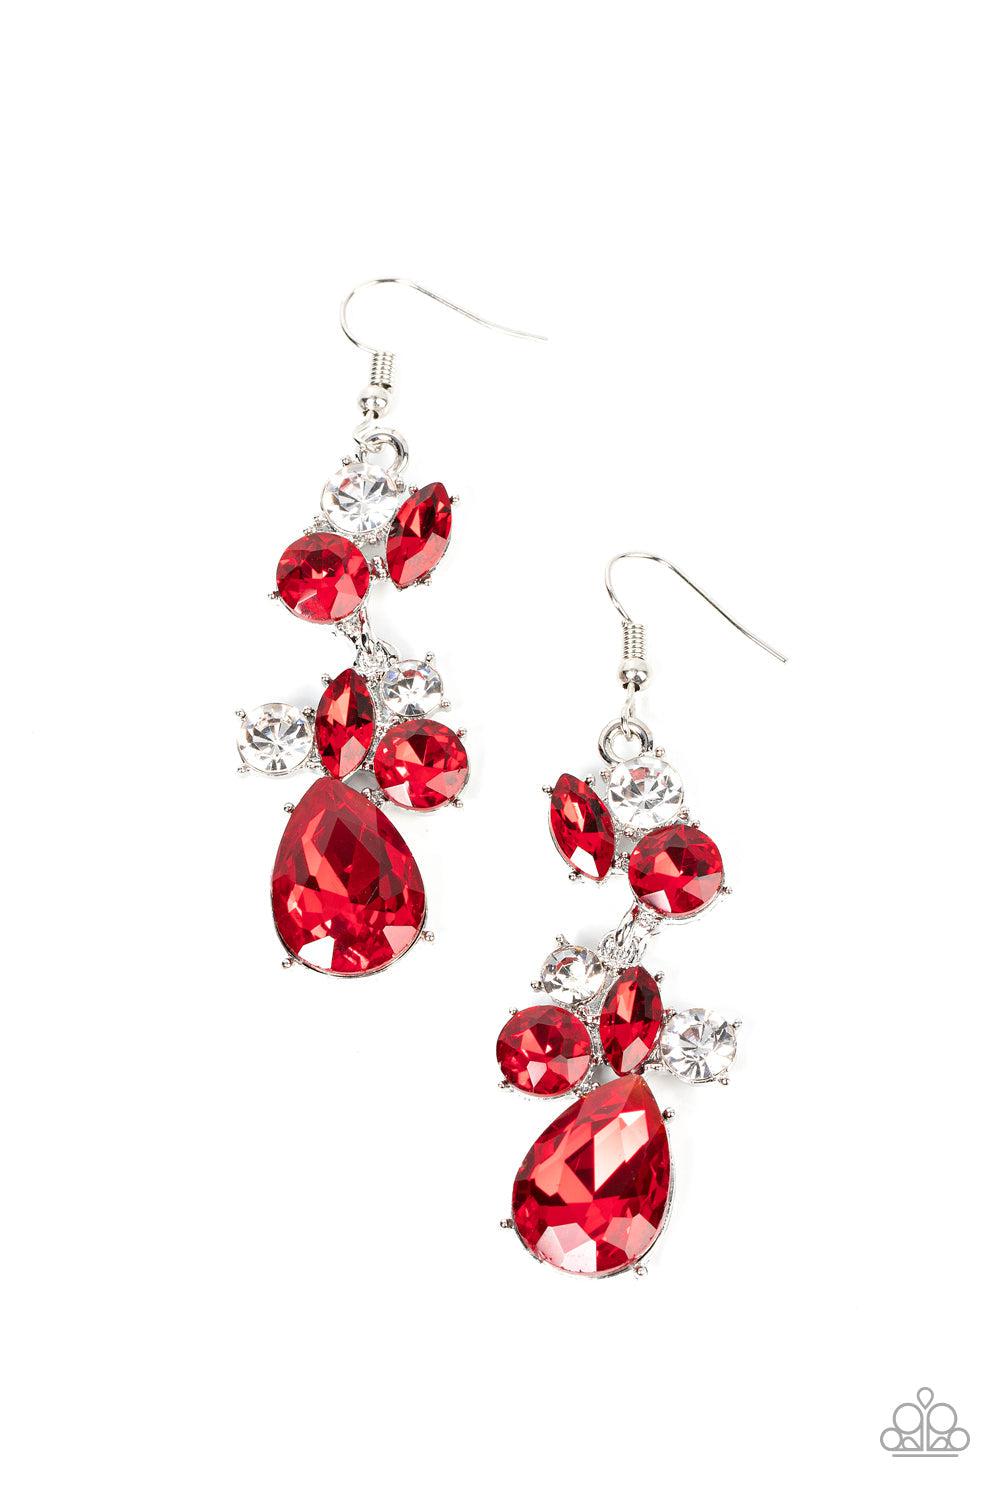 Rhinestone Reveler Red Earrings - Paparazzi Accessories- lightbox - CarasShop.com - $5 Jewelry by Cara Jewels